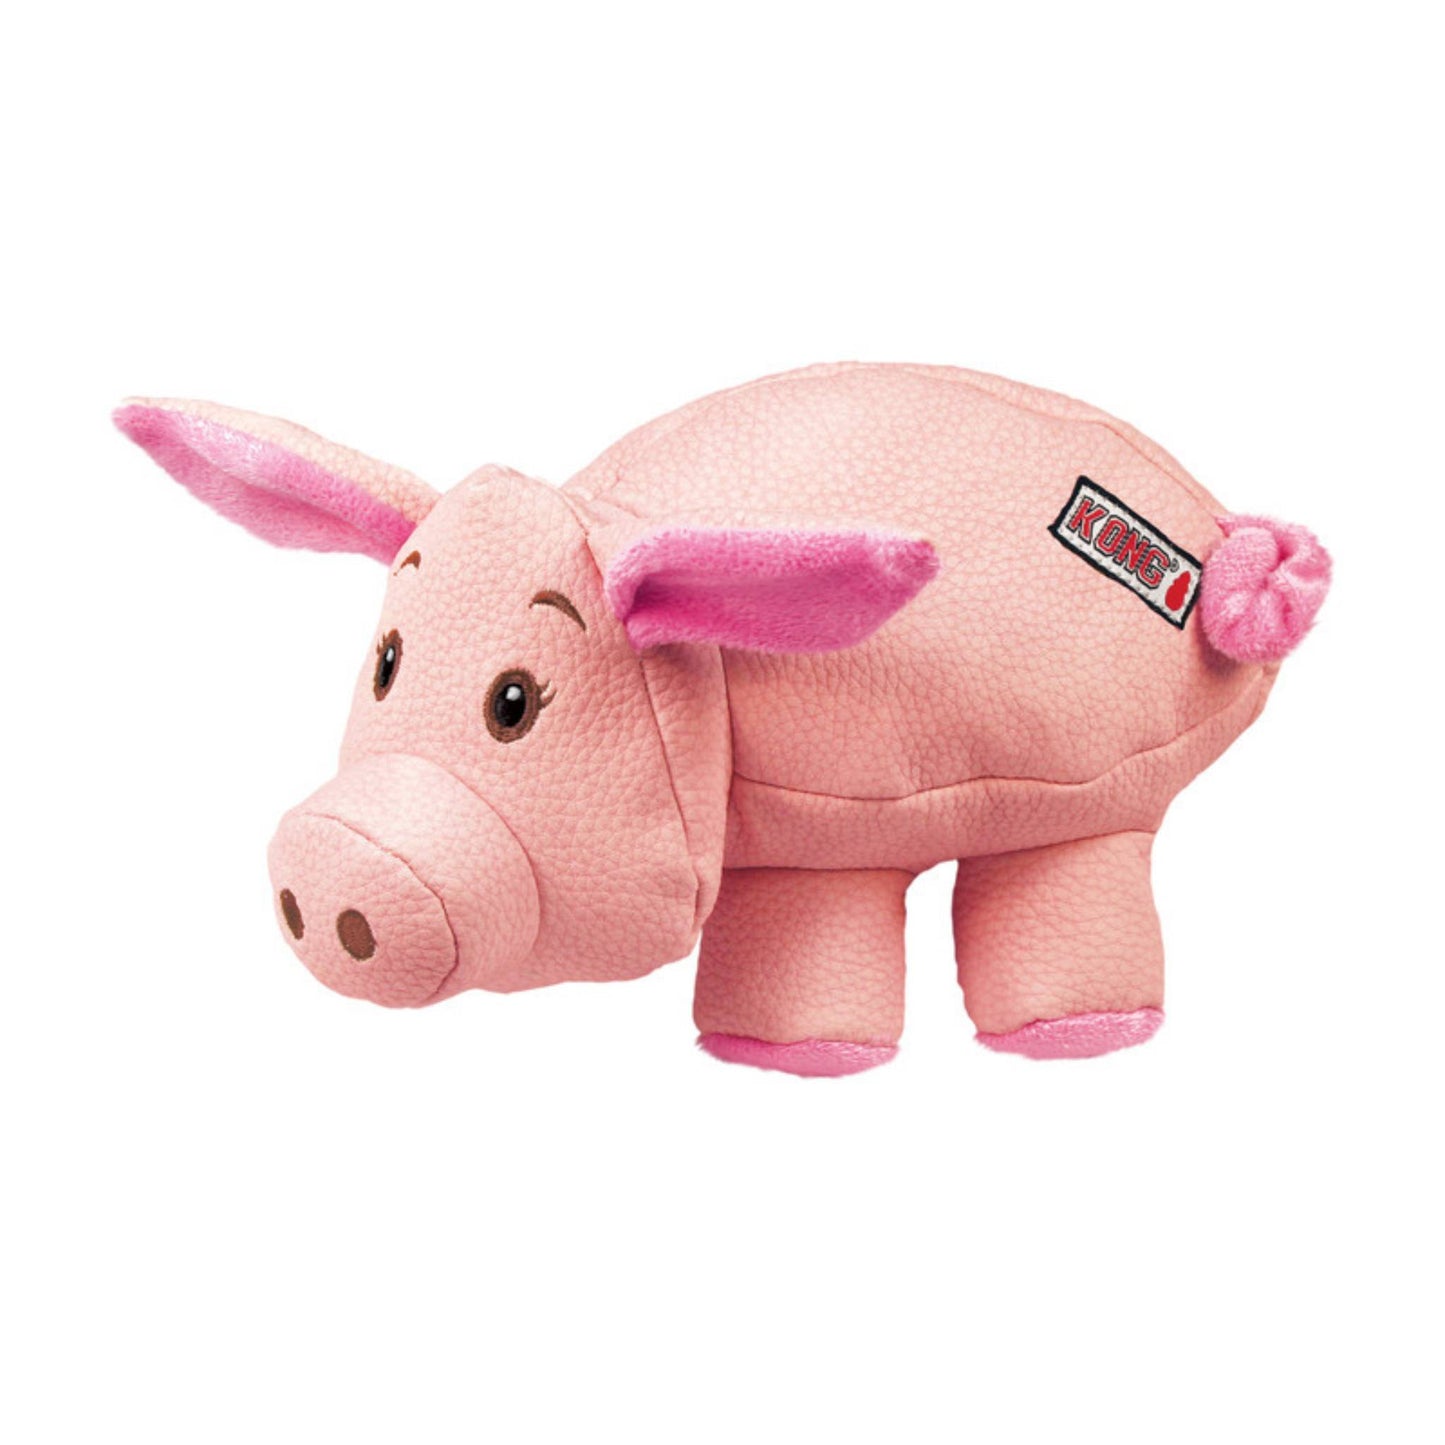 KONG Phatz Pig Dog Toy